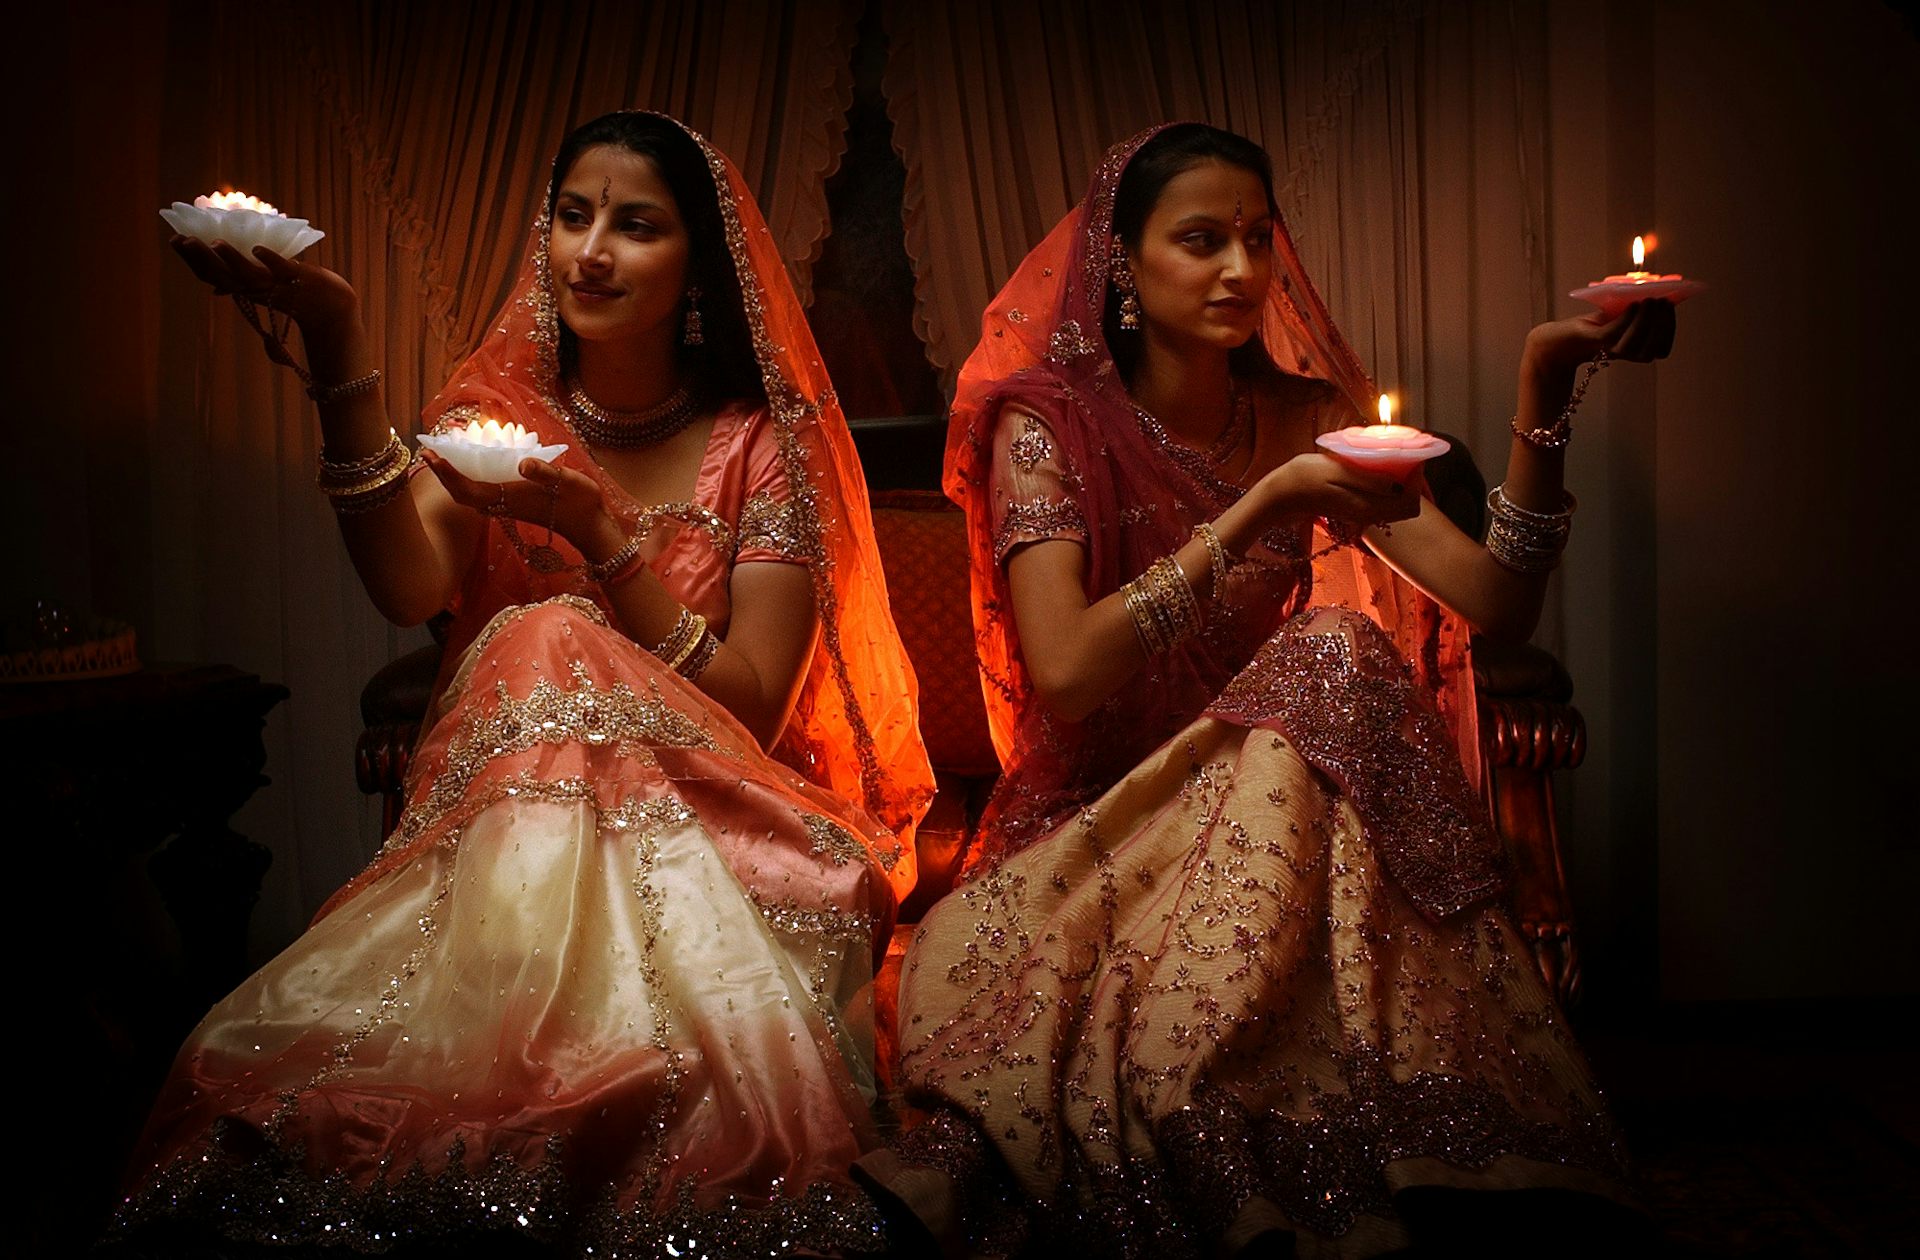 HAPPY Diwali 2015 IMAGES | Diwali 2015 WISHES | Diwali 2015 SMS | 2015  GREETINGS | WALLPAPERS | Diwali wallpaper, Happy diwali wallpapers, Happy  diwali